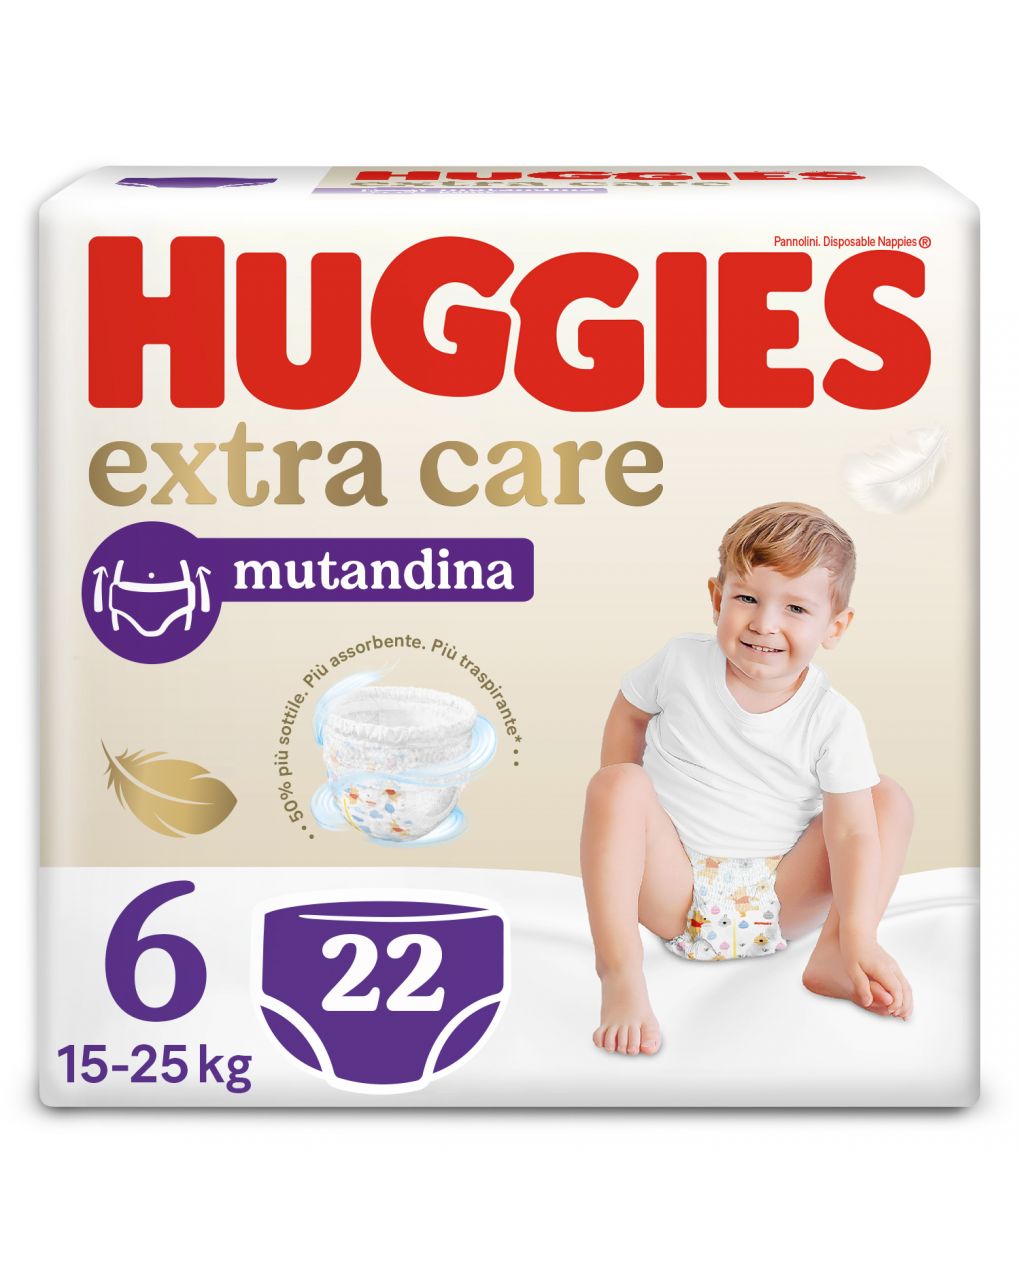 Pannolini huggies extra care mutandina tg. 6 (15-25 kg) - formato da 22 pannolini